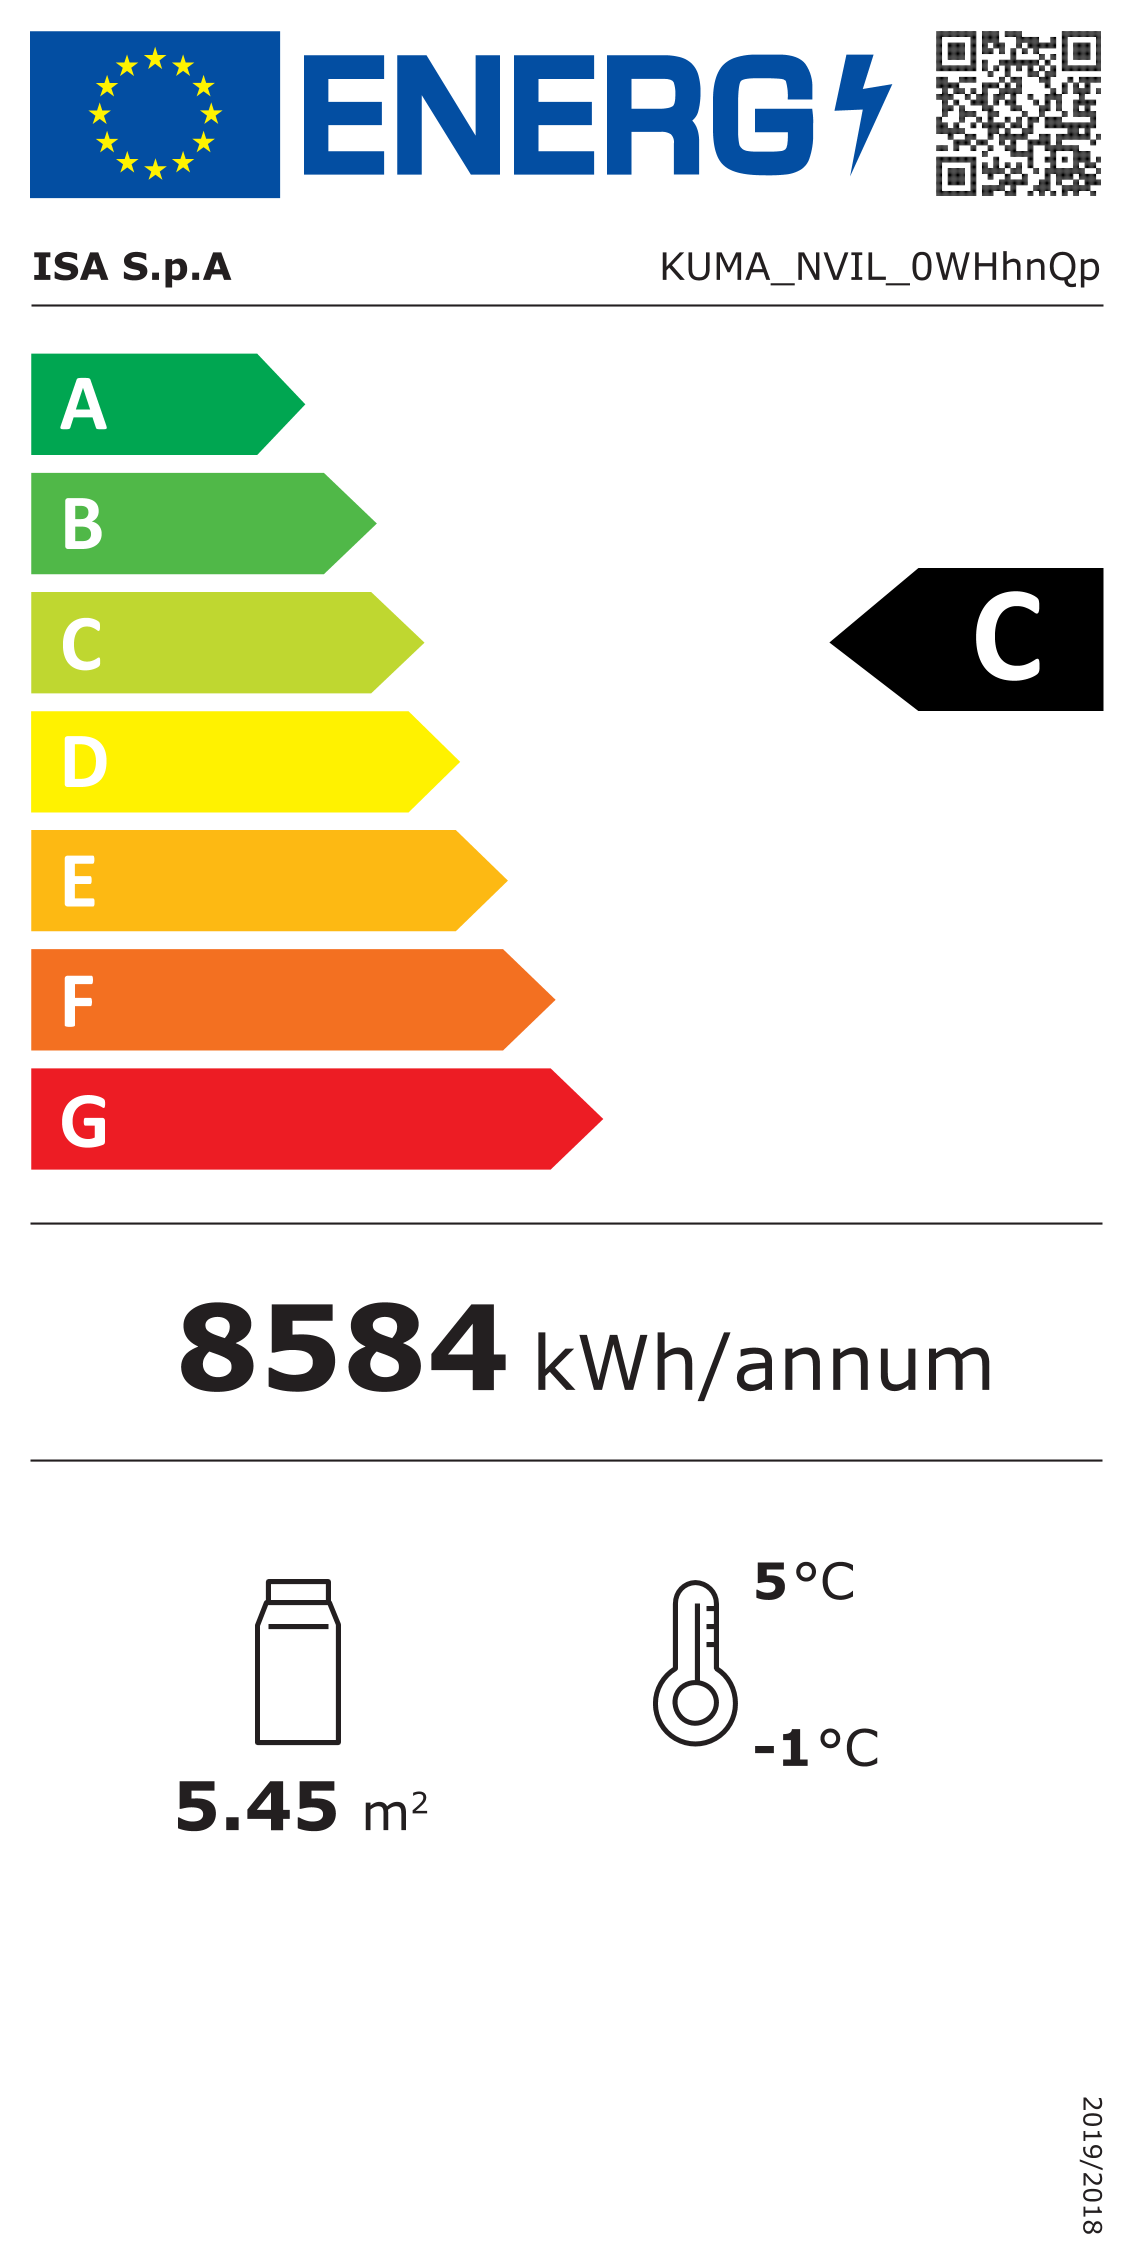 MICHELIN CrossClimate 2 XL 215/65 R16 102V - европейски етикет